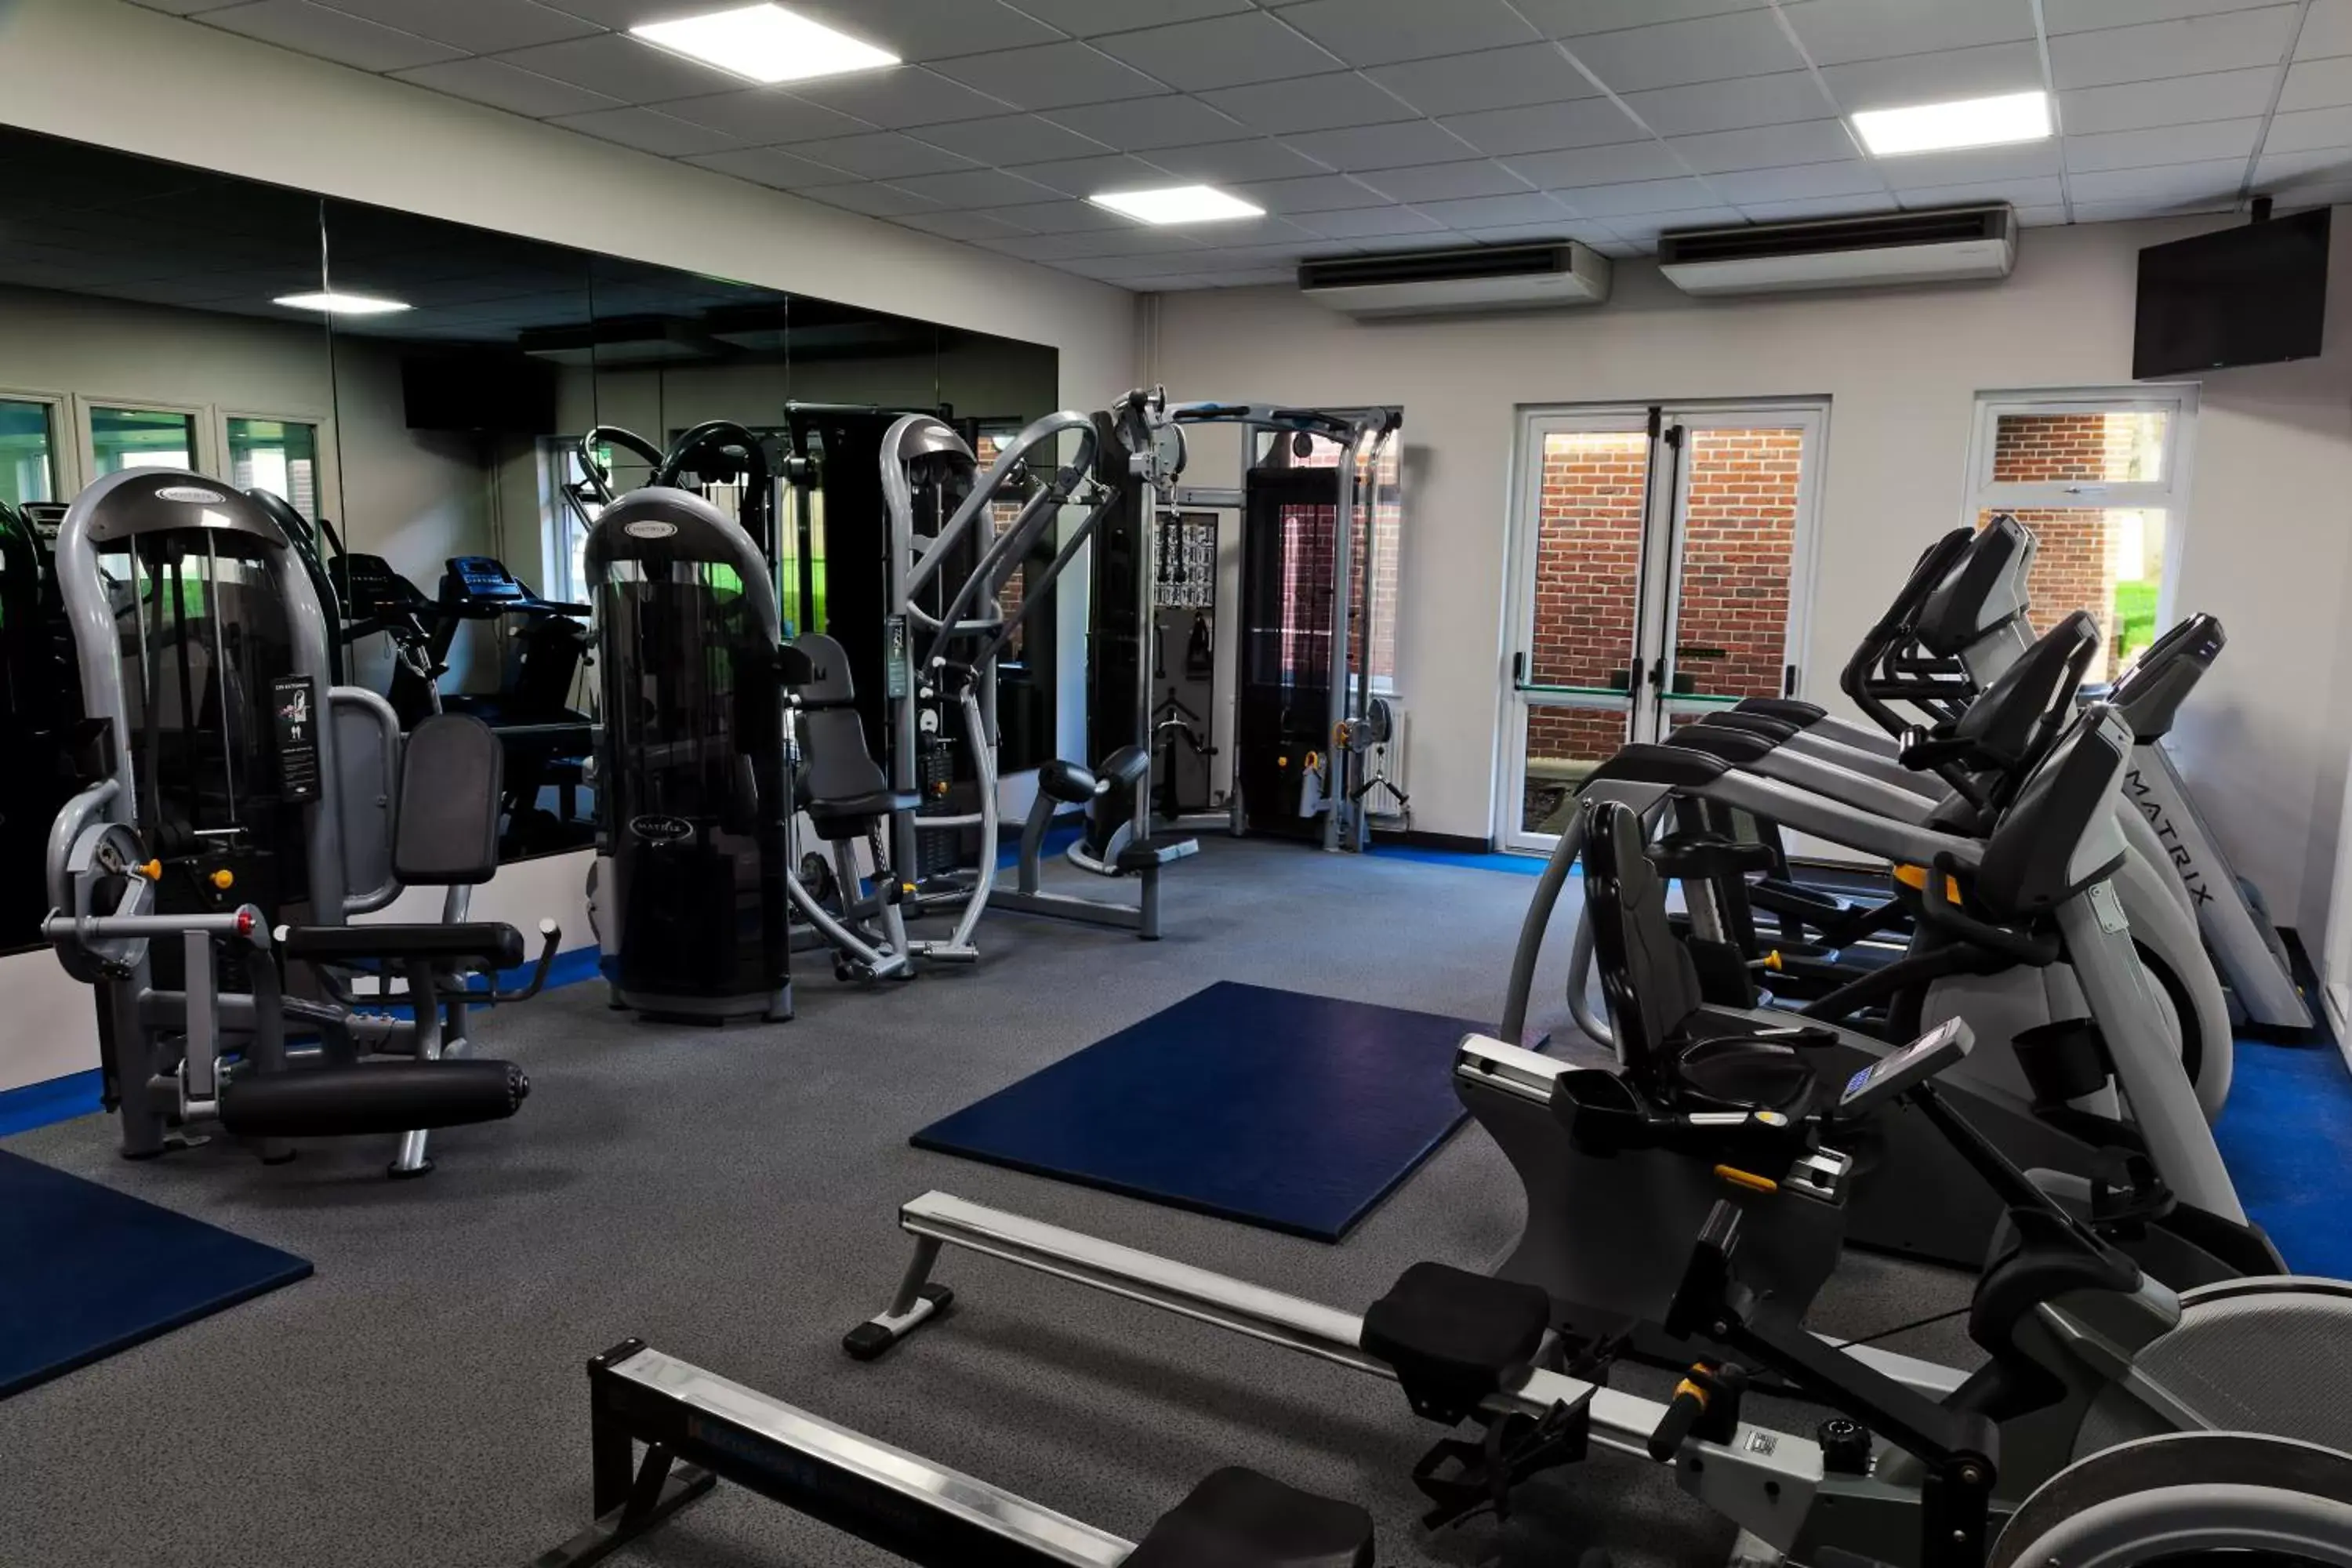 Fitness centre/facilities, Fitness Center/Facilities in De Vere Horsley Estate